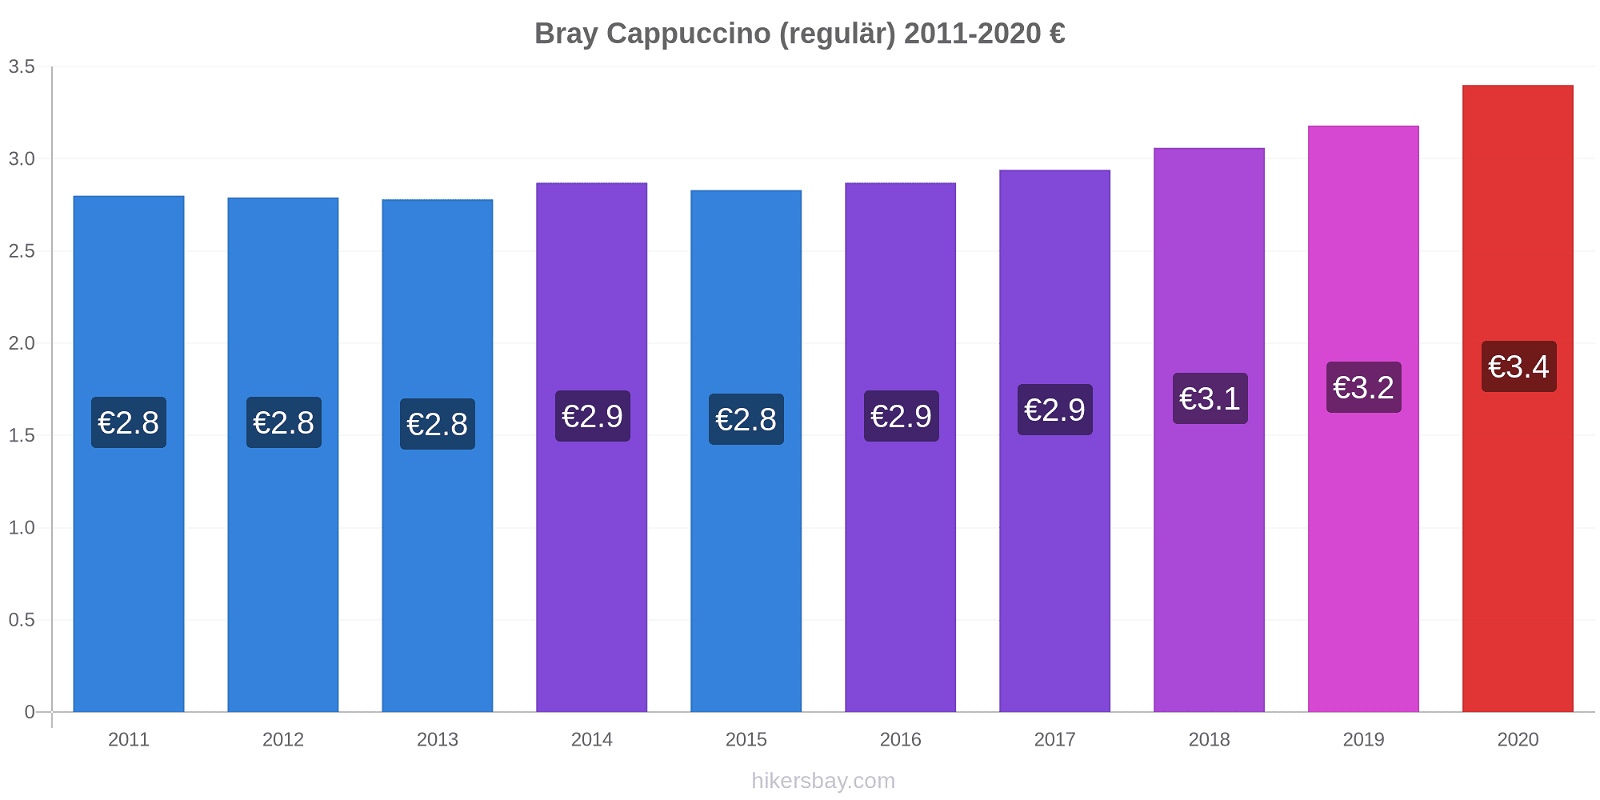 Bray Preisänderungen Cappuccino (regulär) hikersbay.com